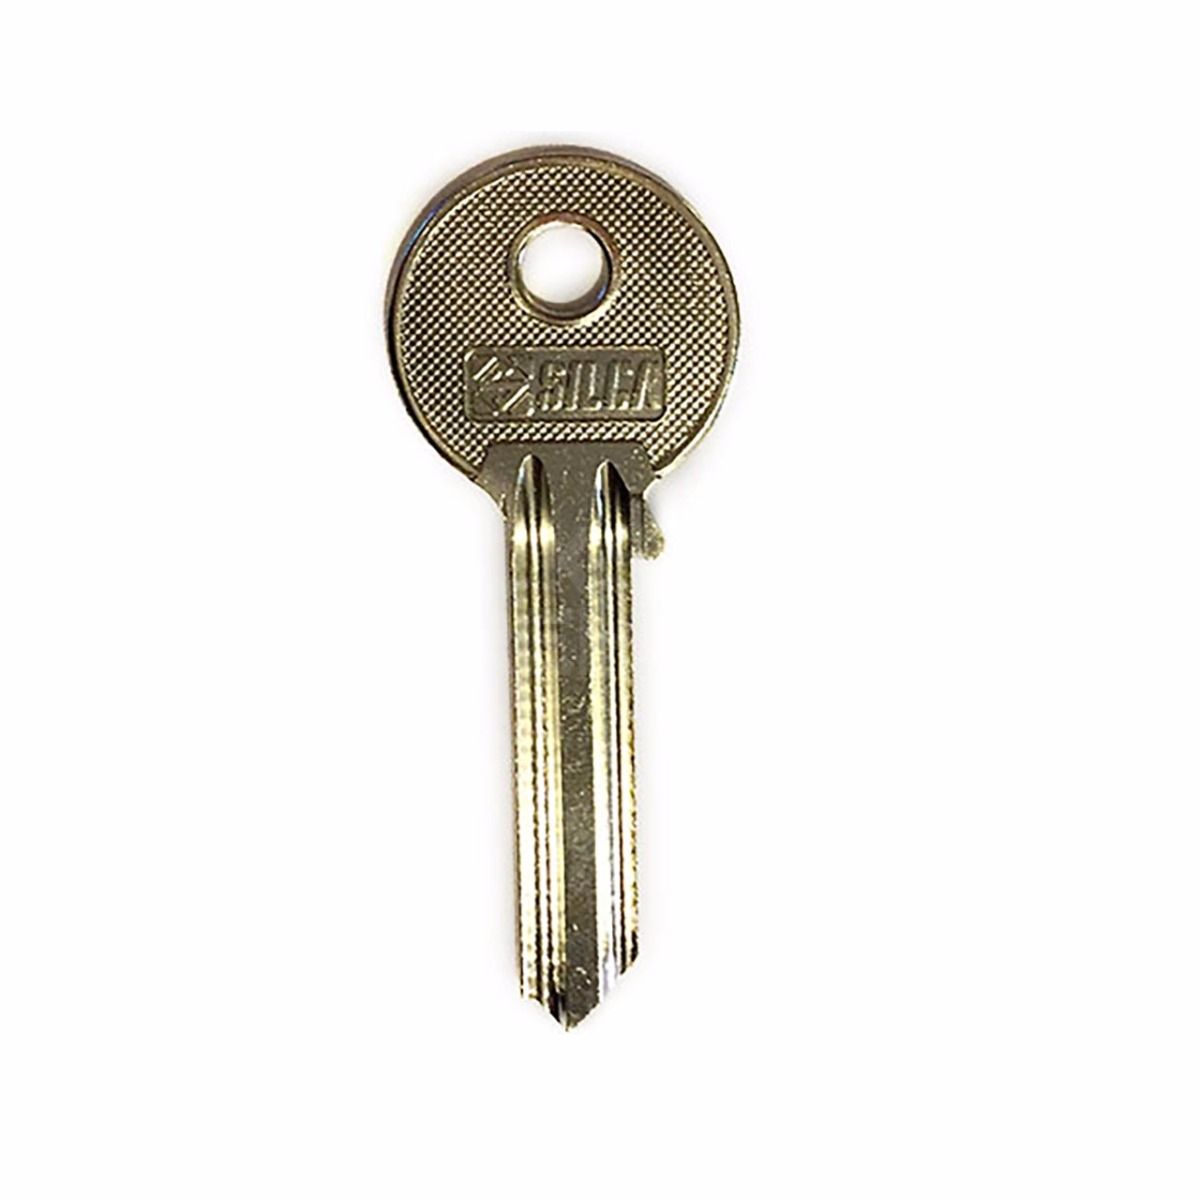 Extra Key for Tessi Shutter Locks